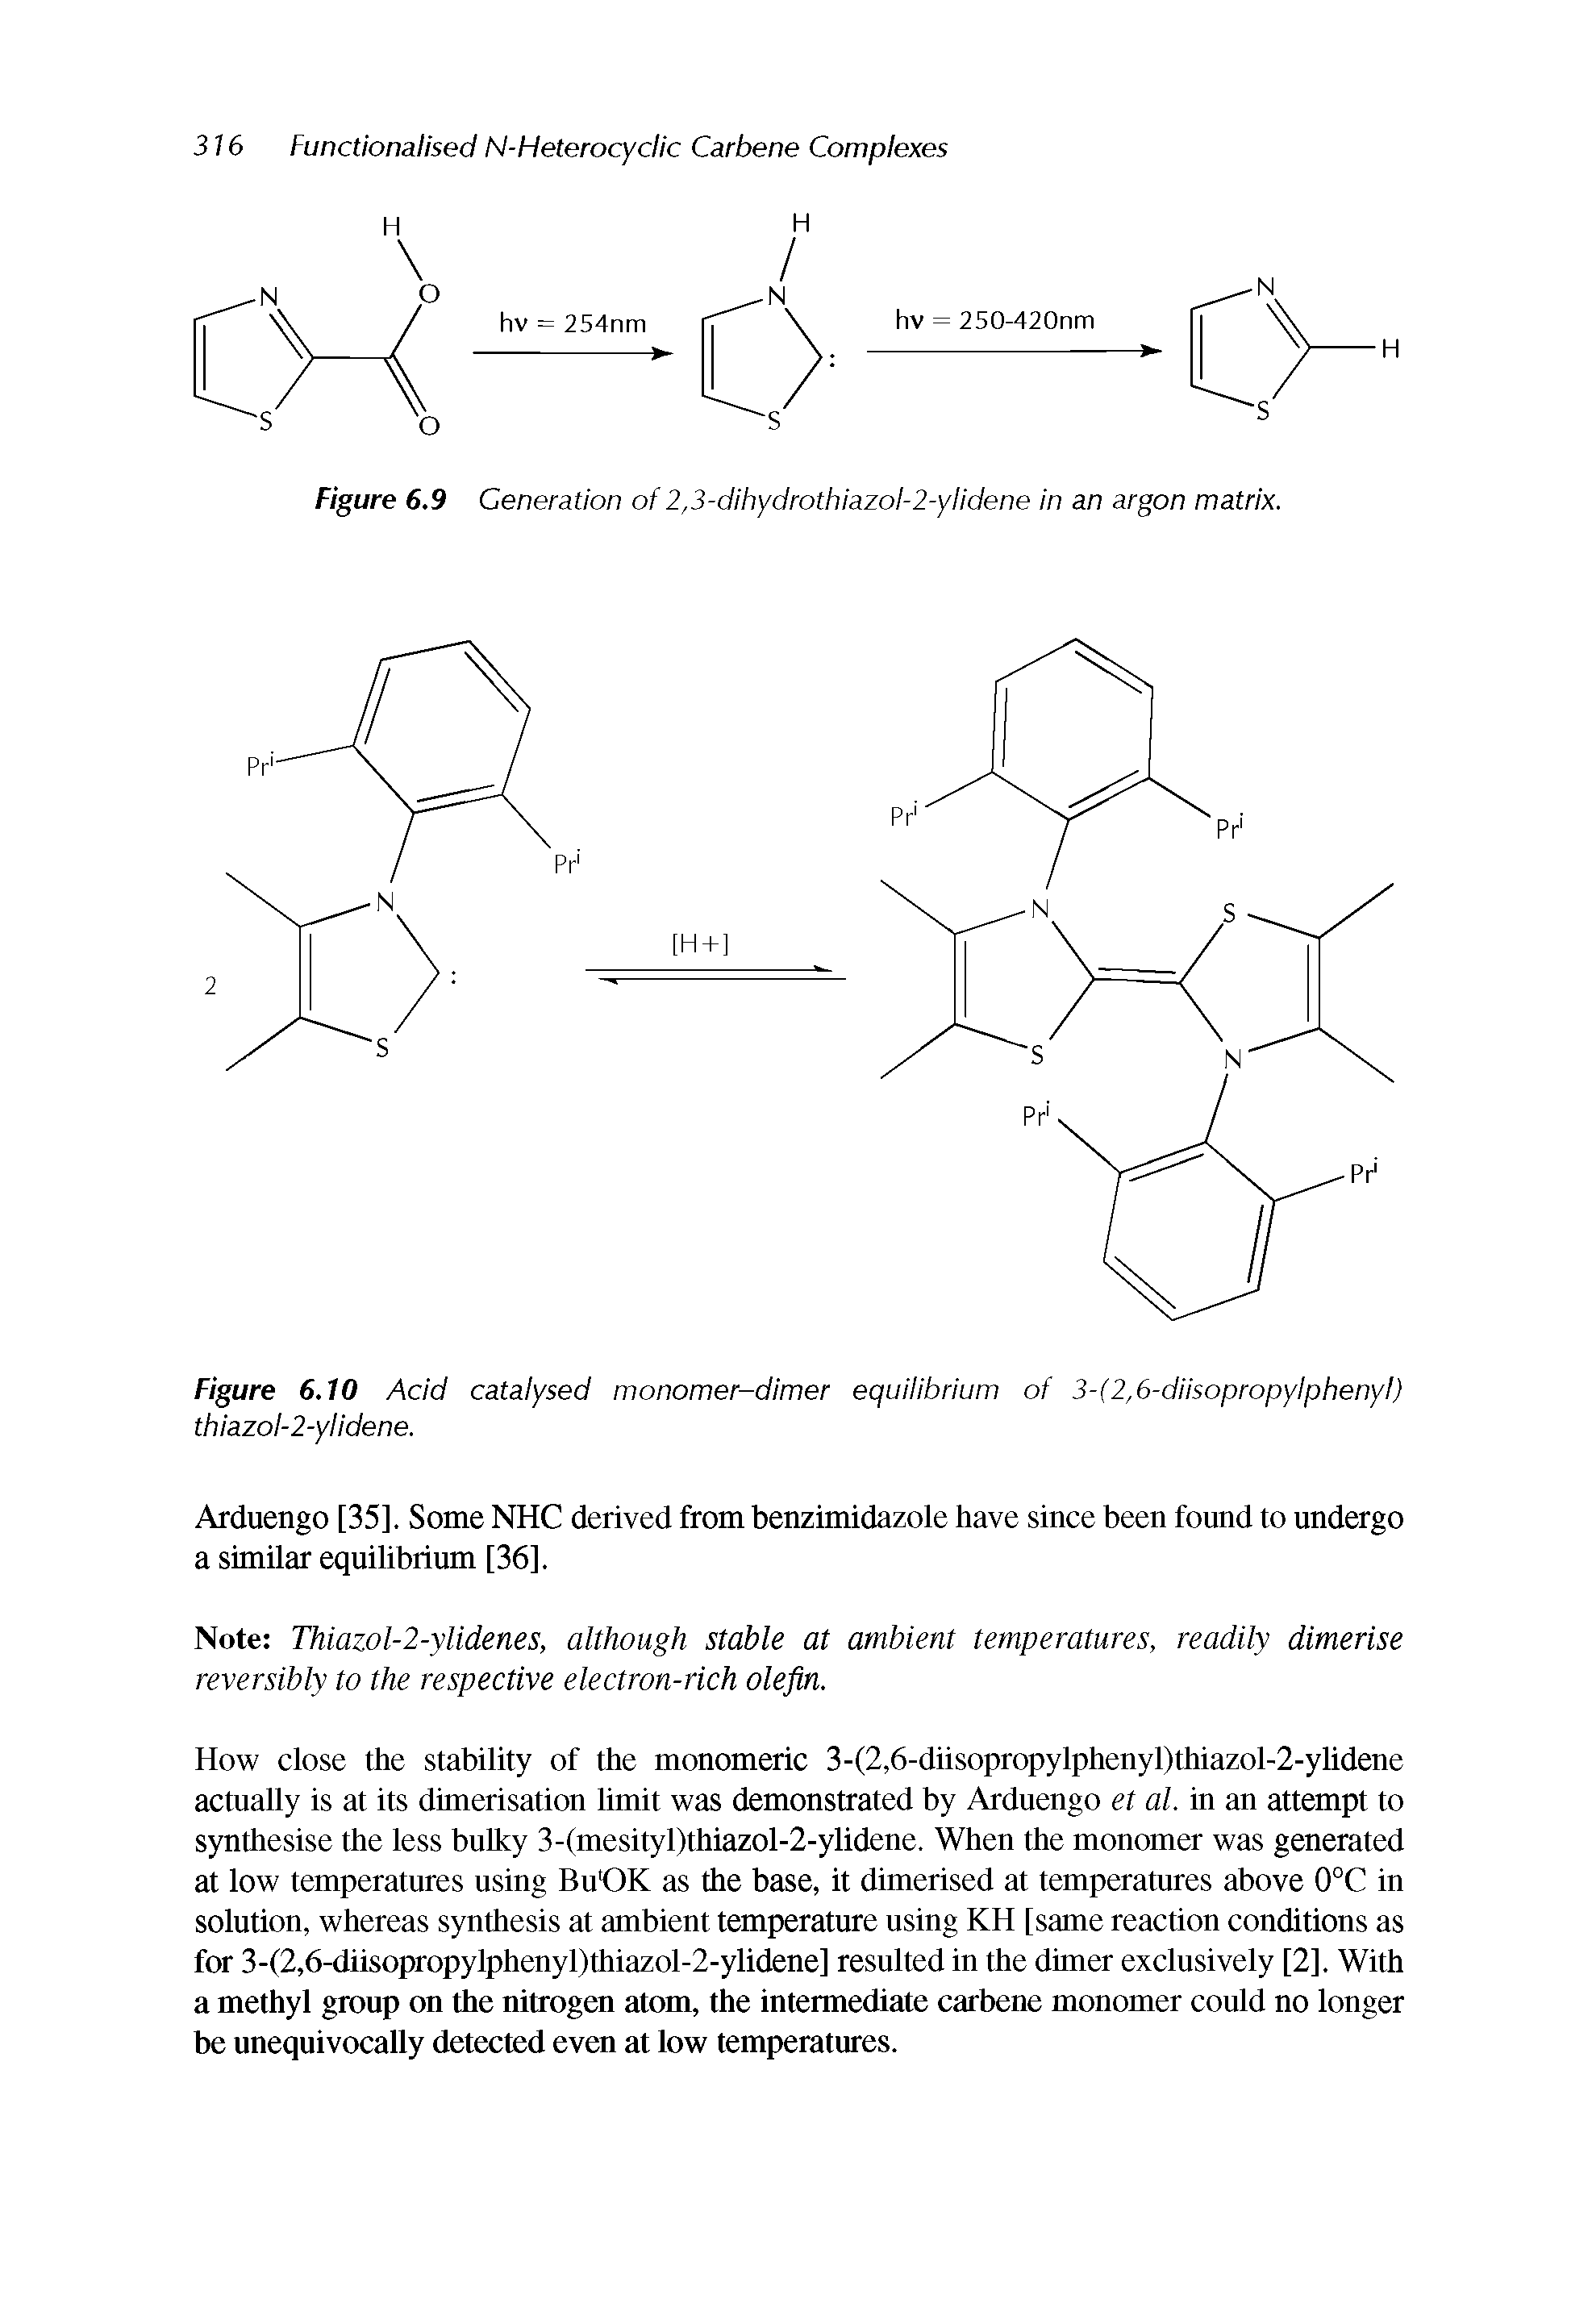 Figure 6,10 Acid catalysed monomer-dimer equilibrium of 3-(2,6-diisopropylphenyl) thiazol-2-ylidene.